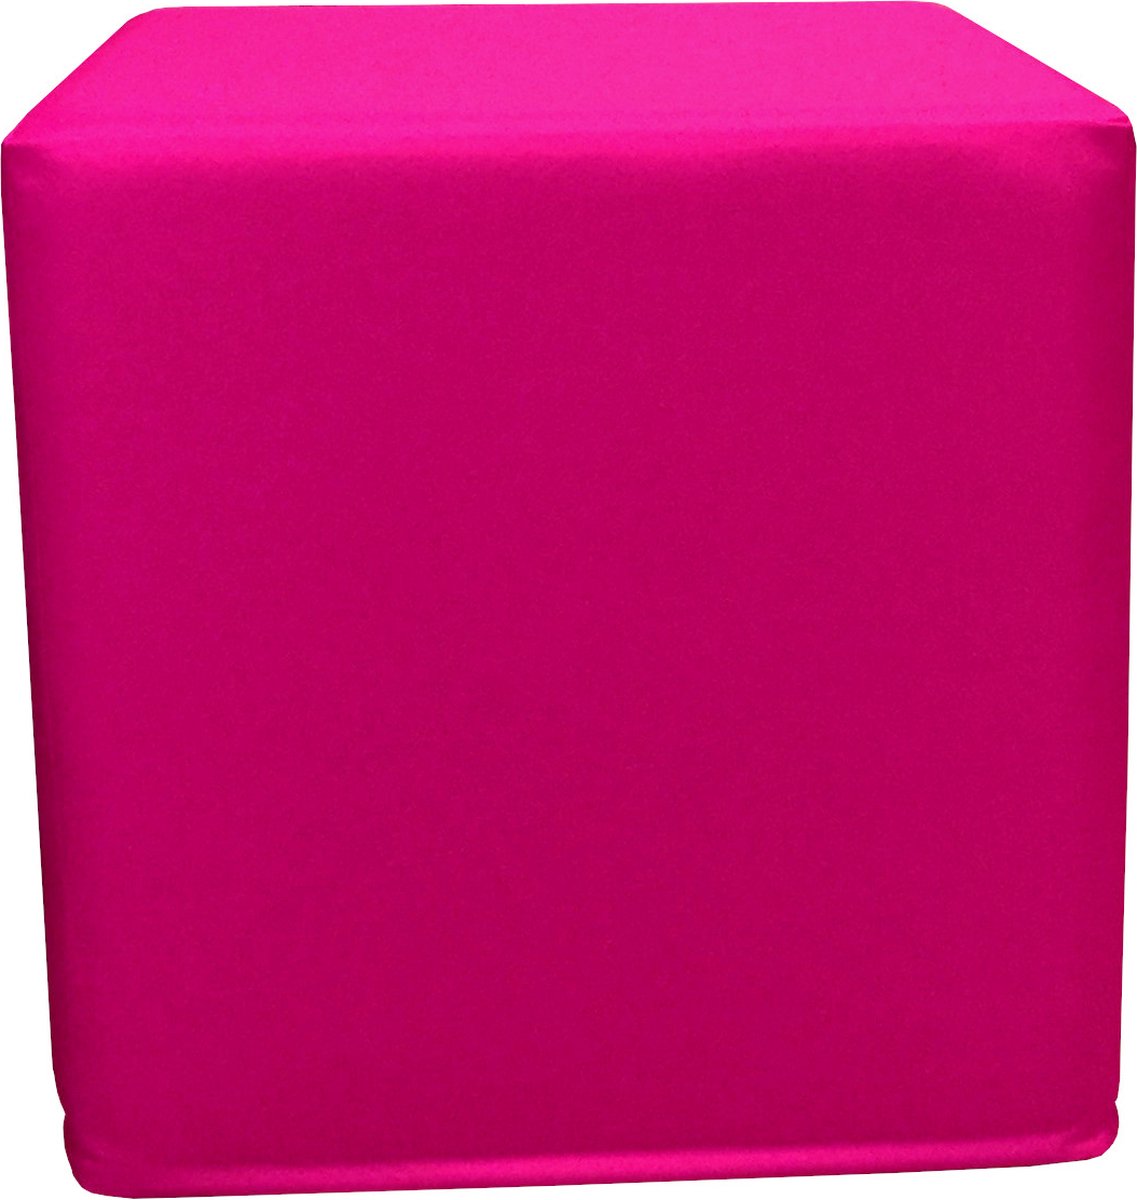 Tubbli Poef roze meisje kinder 30 centimeter waterproof slijtvast in vele kleuren.